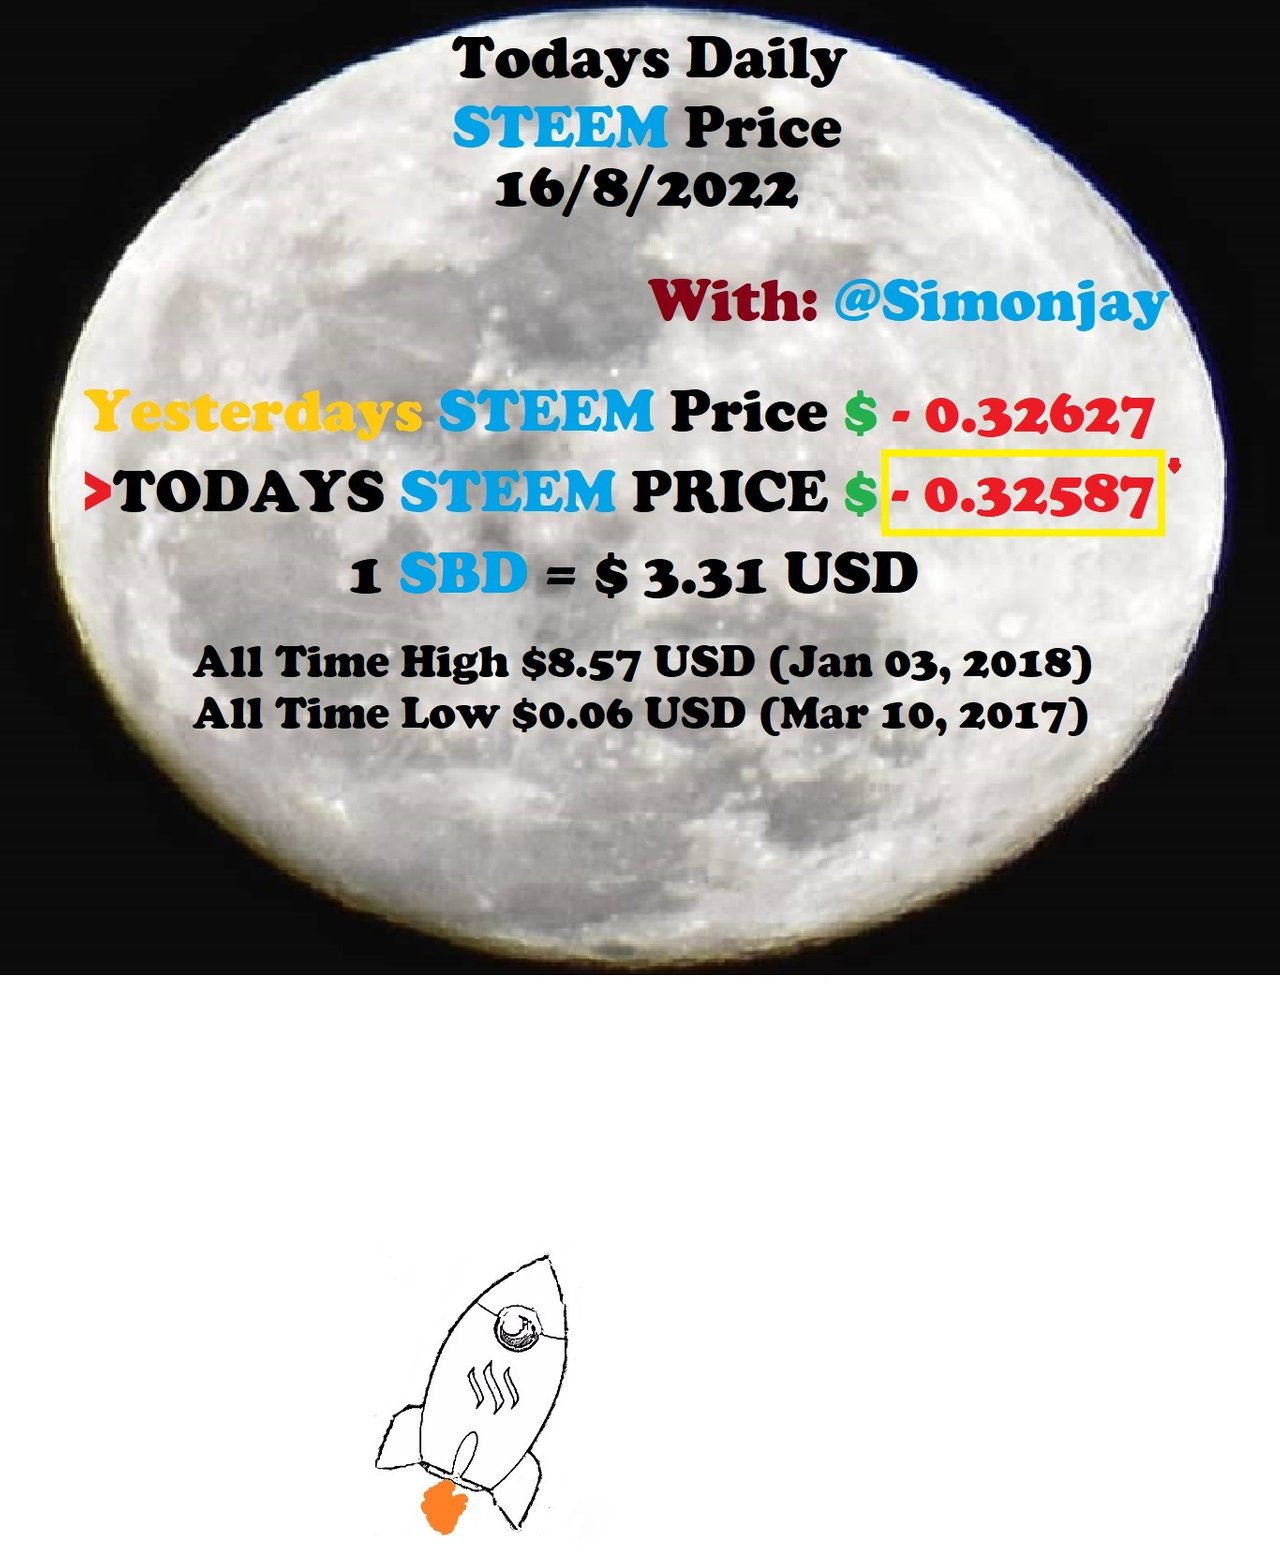 Steem Daily Price MoonTemplate16082022.jpg